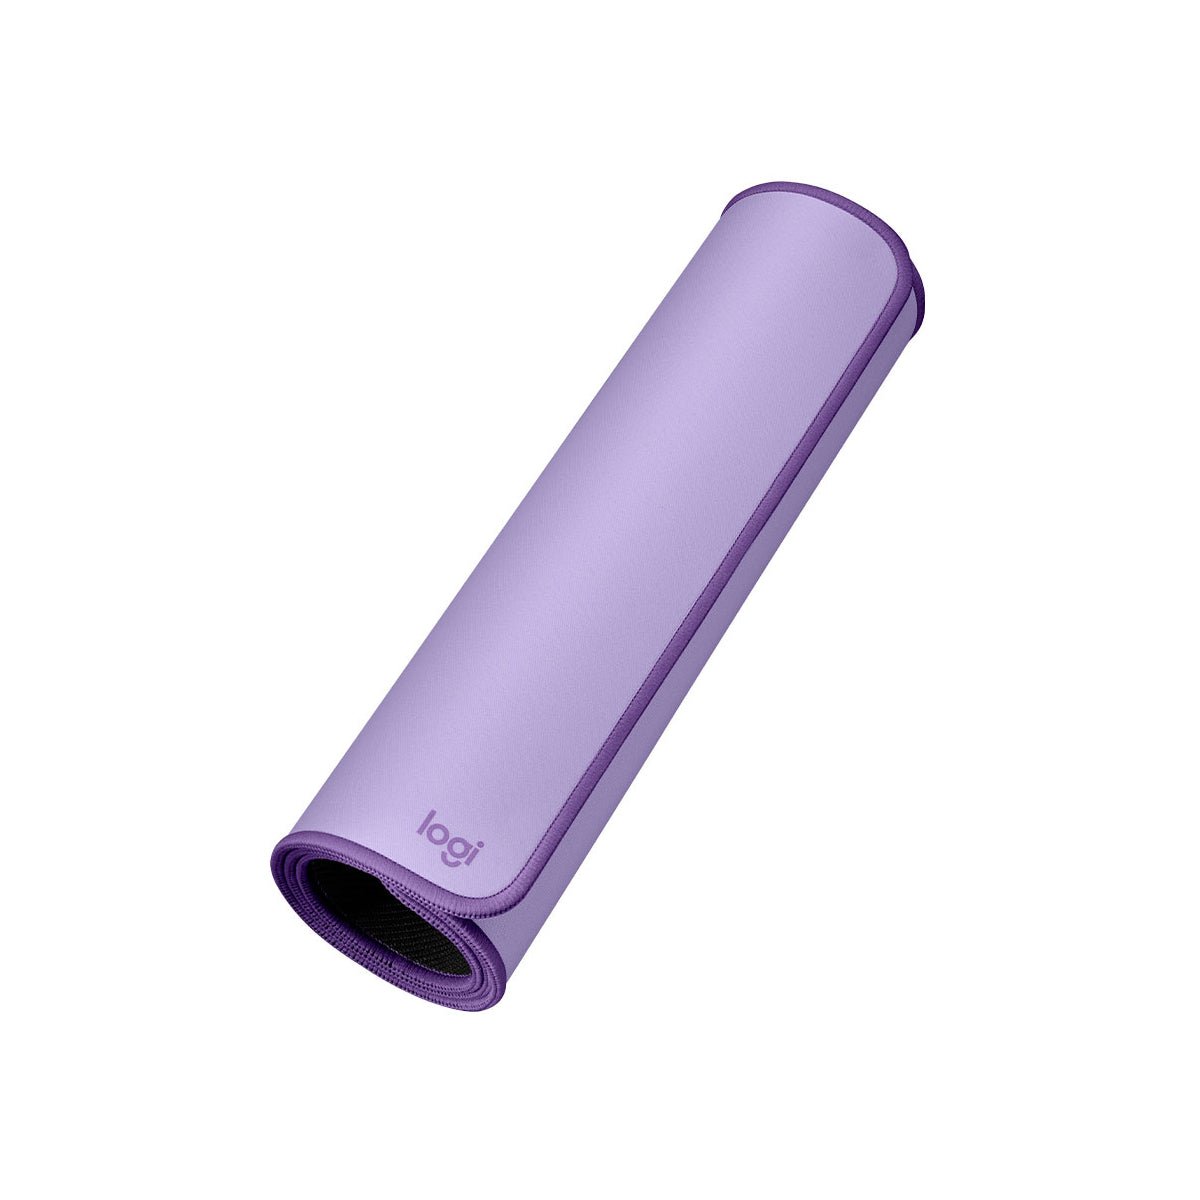 Logitech Gaming Mouse Mat - Purple - حصيرة الفأرة - Store 974 | ستور ٩٧٤